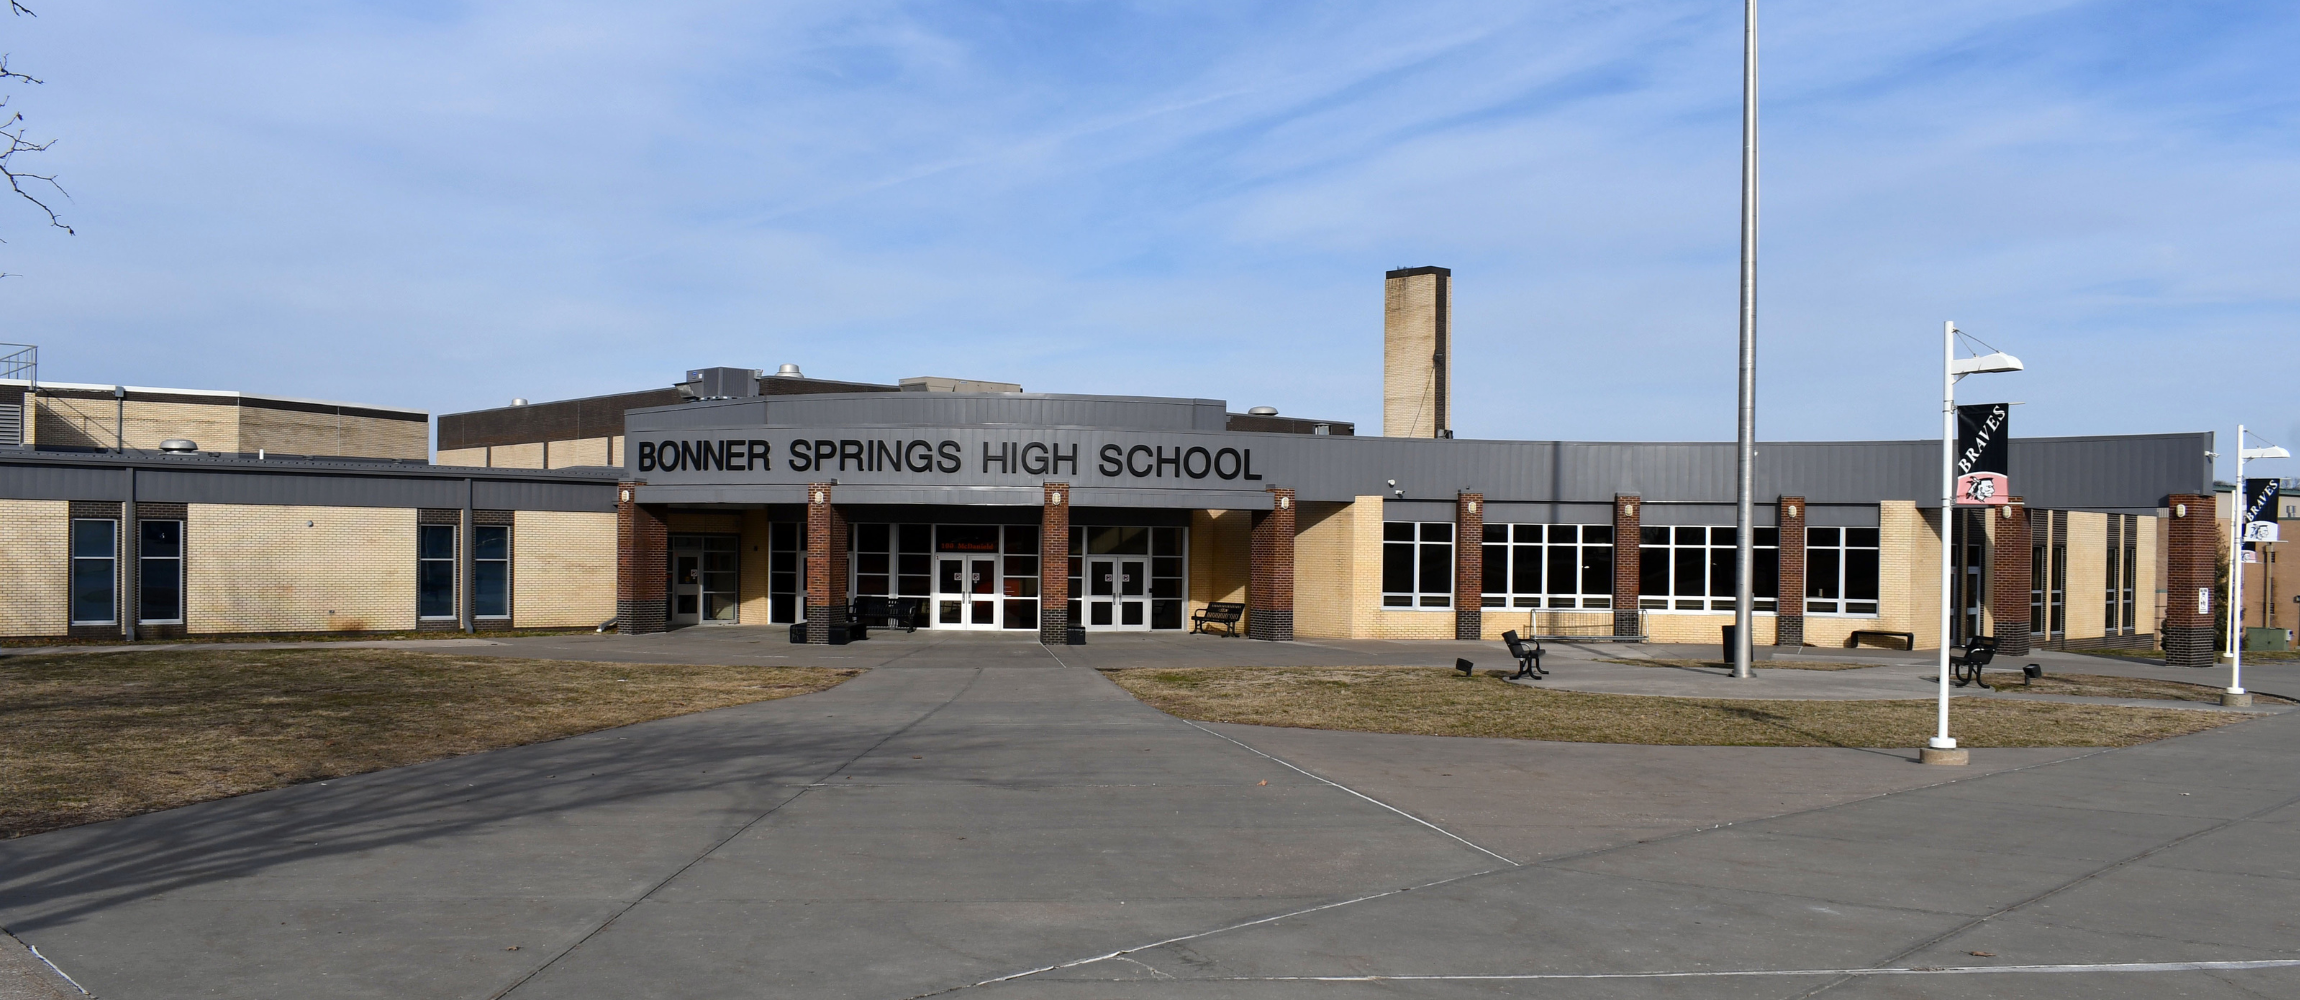 front of bonner springs high school building